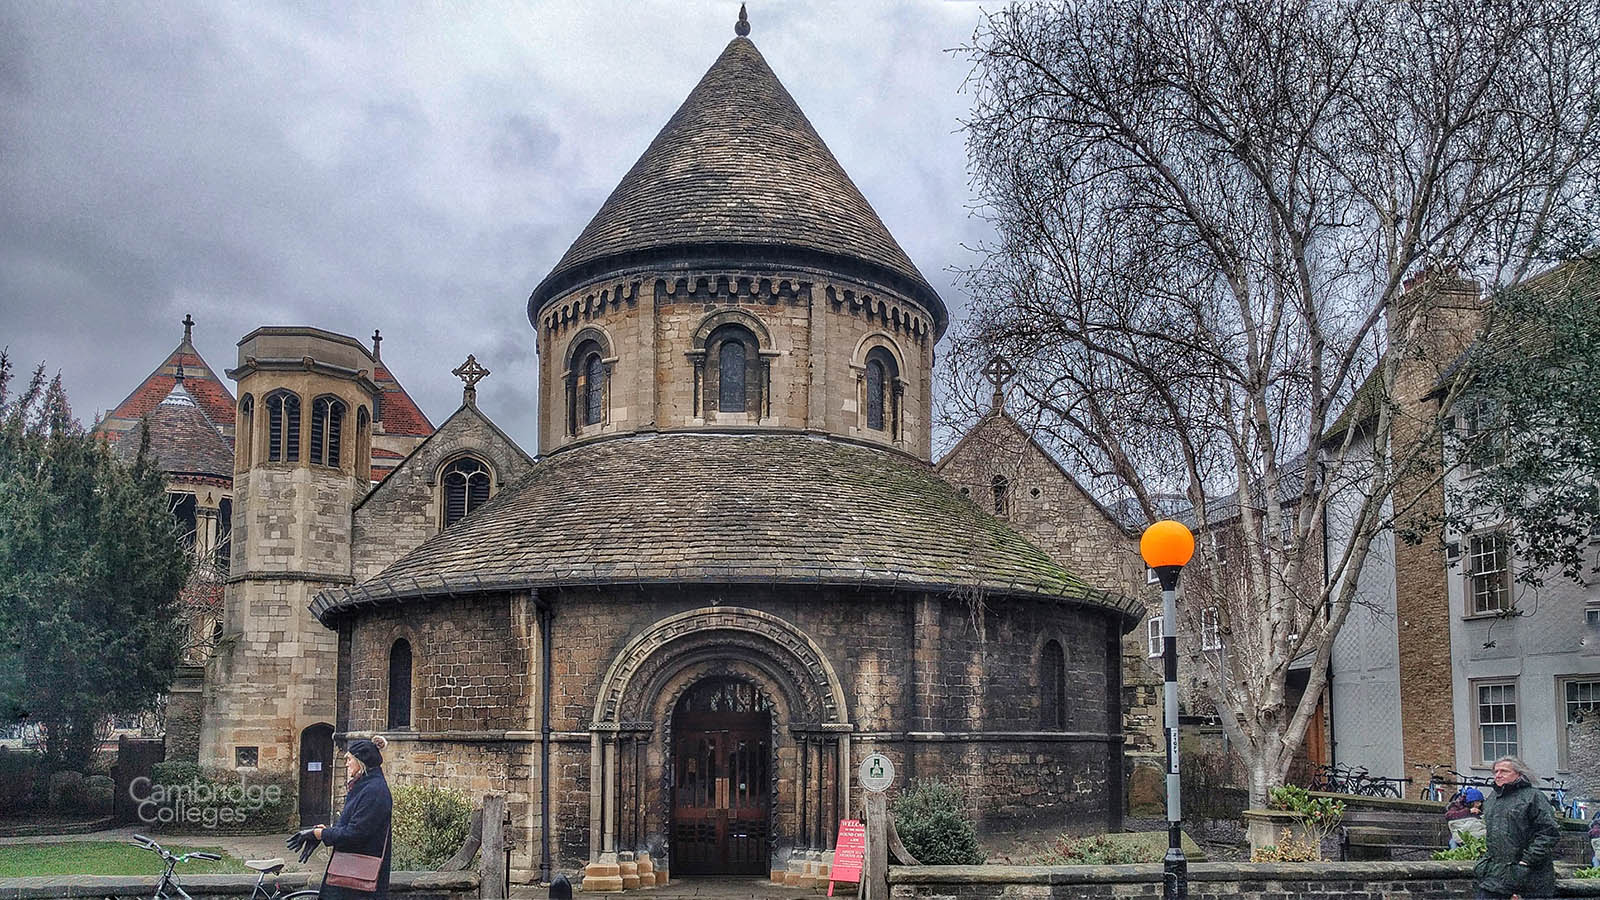 The Round church, Cambridge